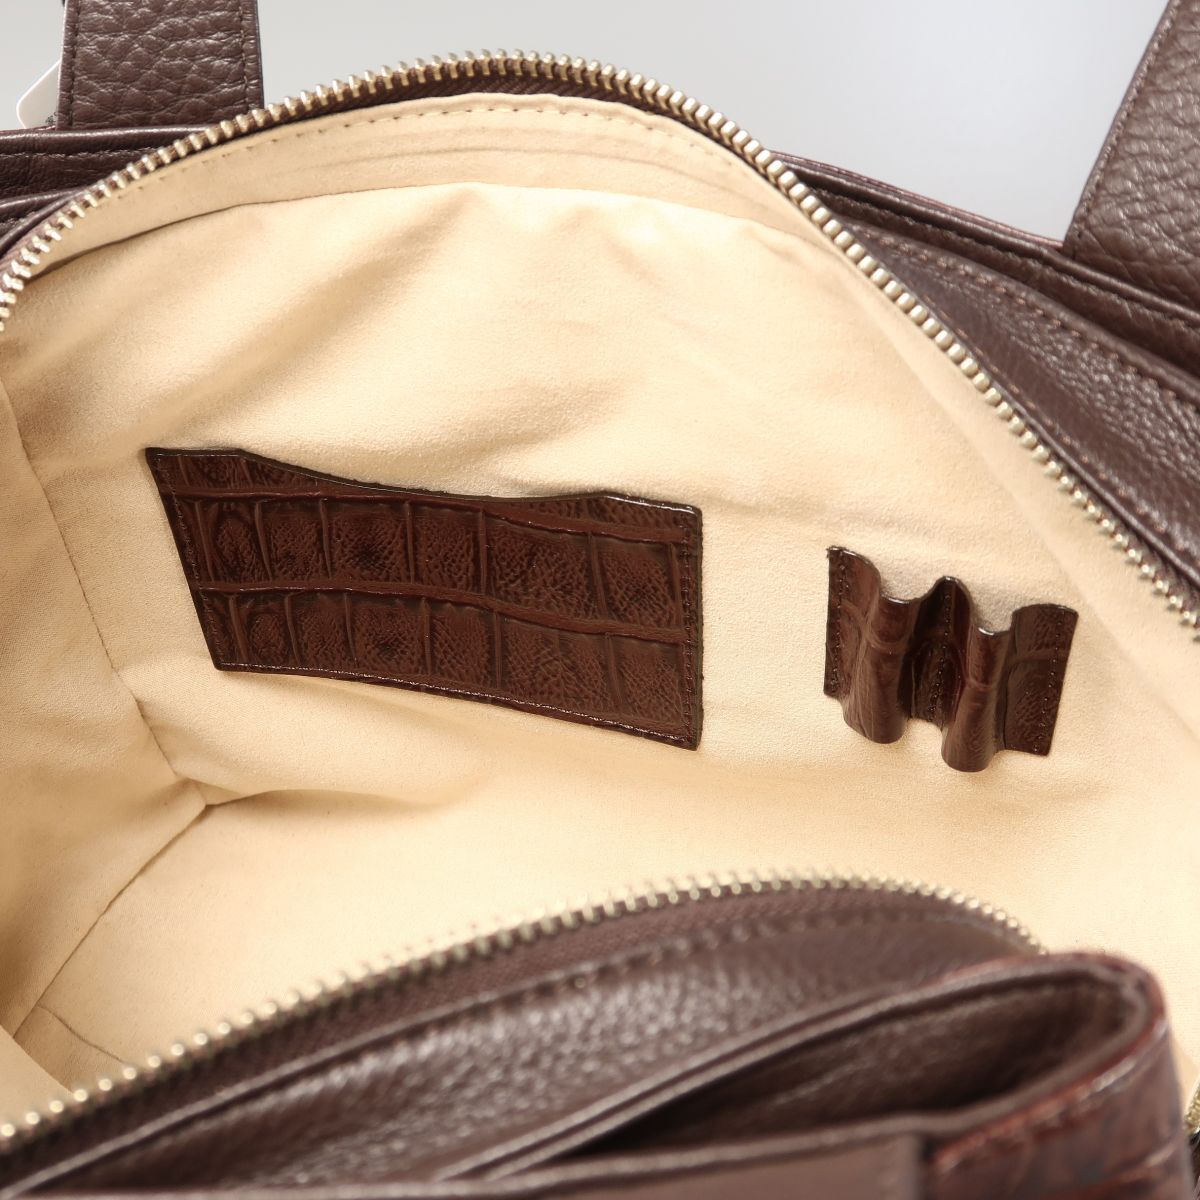 GP5705^ Ginza tani The wa kai man type pushed . leather / cow leather handbag / tote bag 3. structure handbag bag brown group 